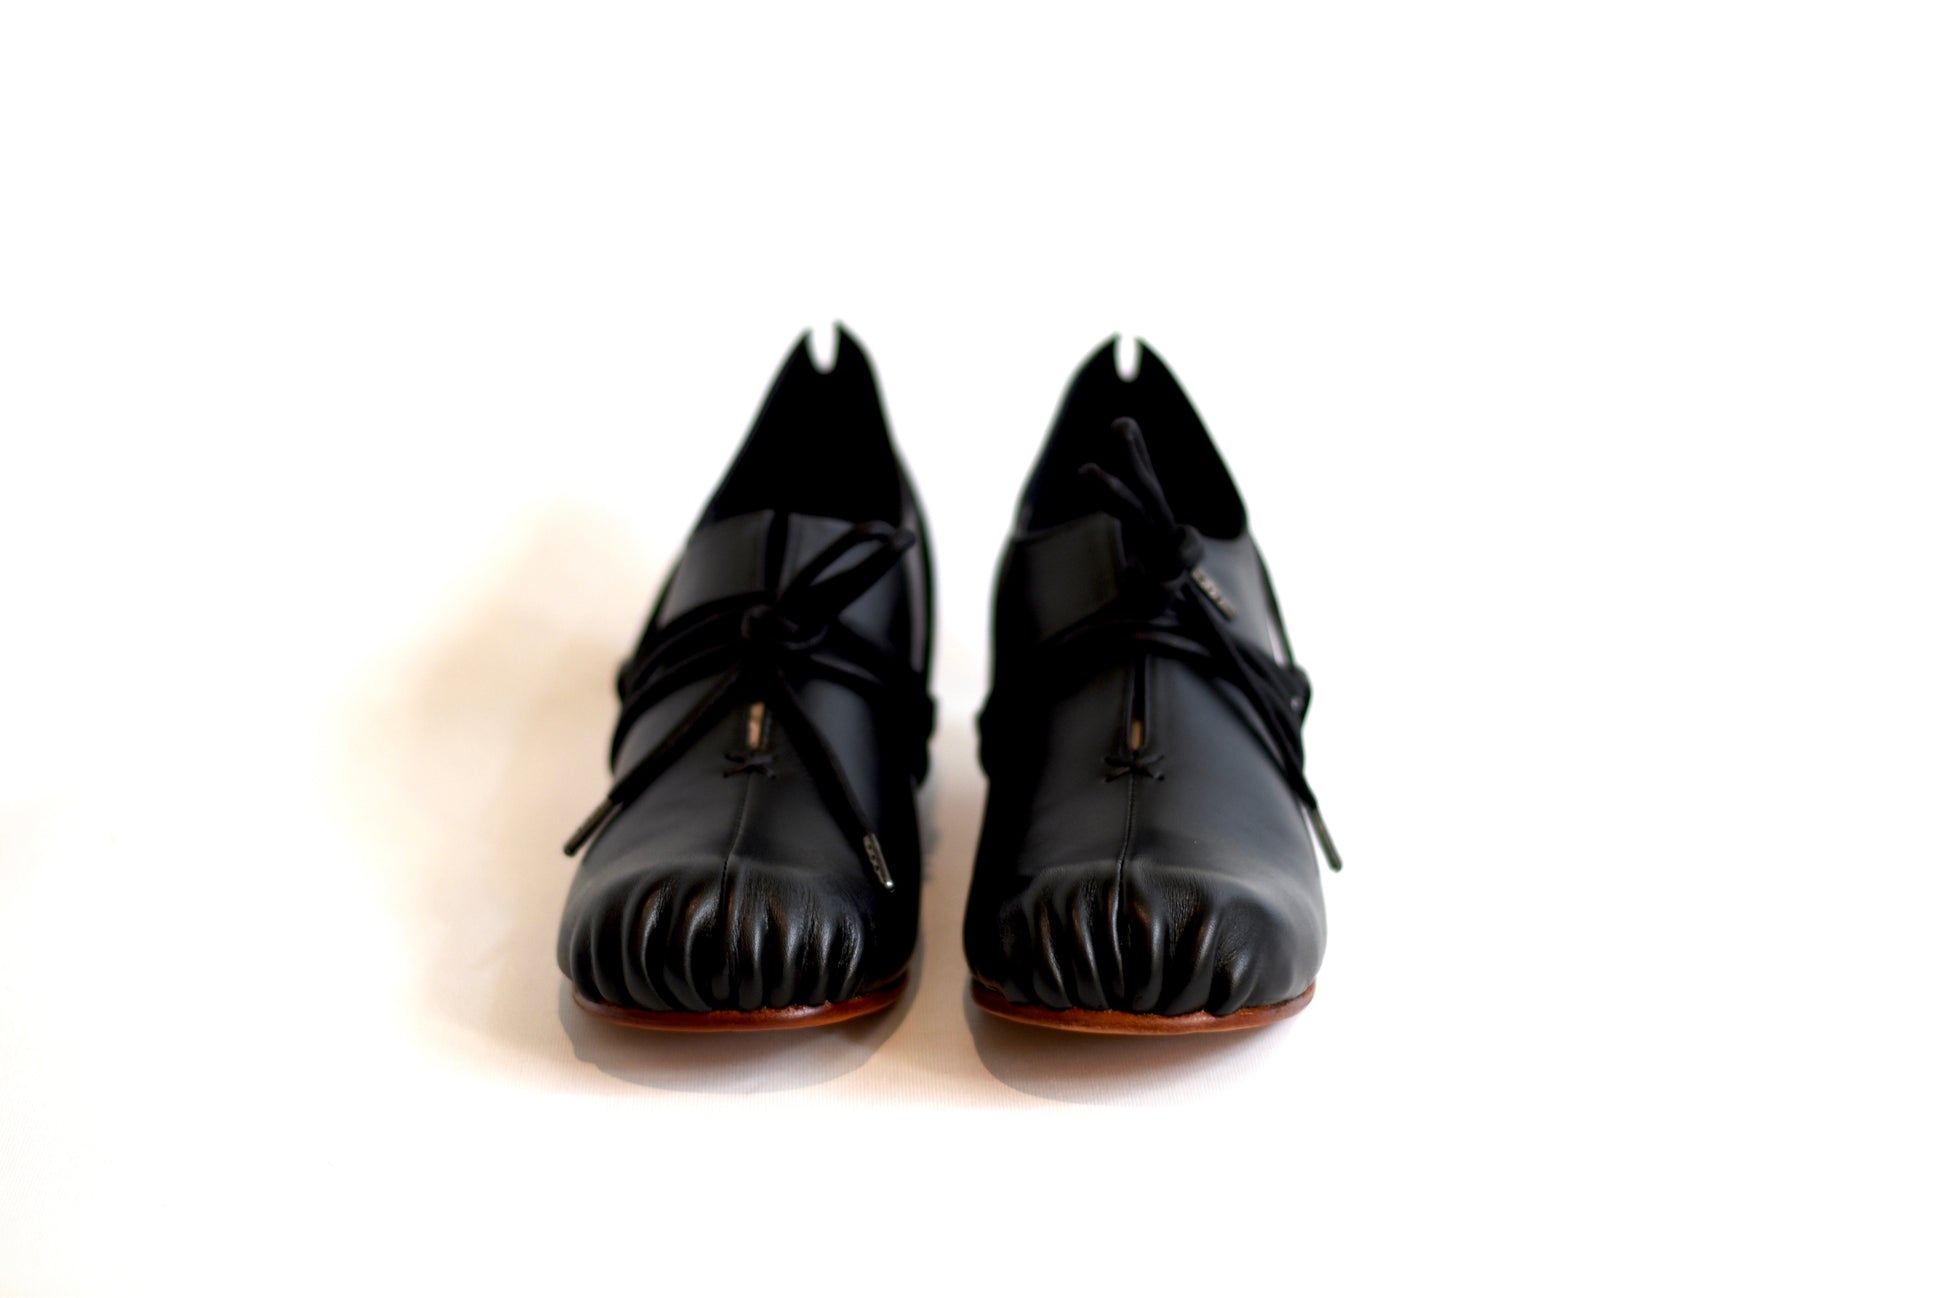 The Foundry Shoe - Black, wraparound laces